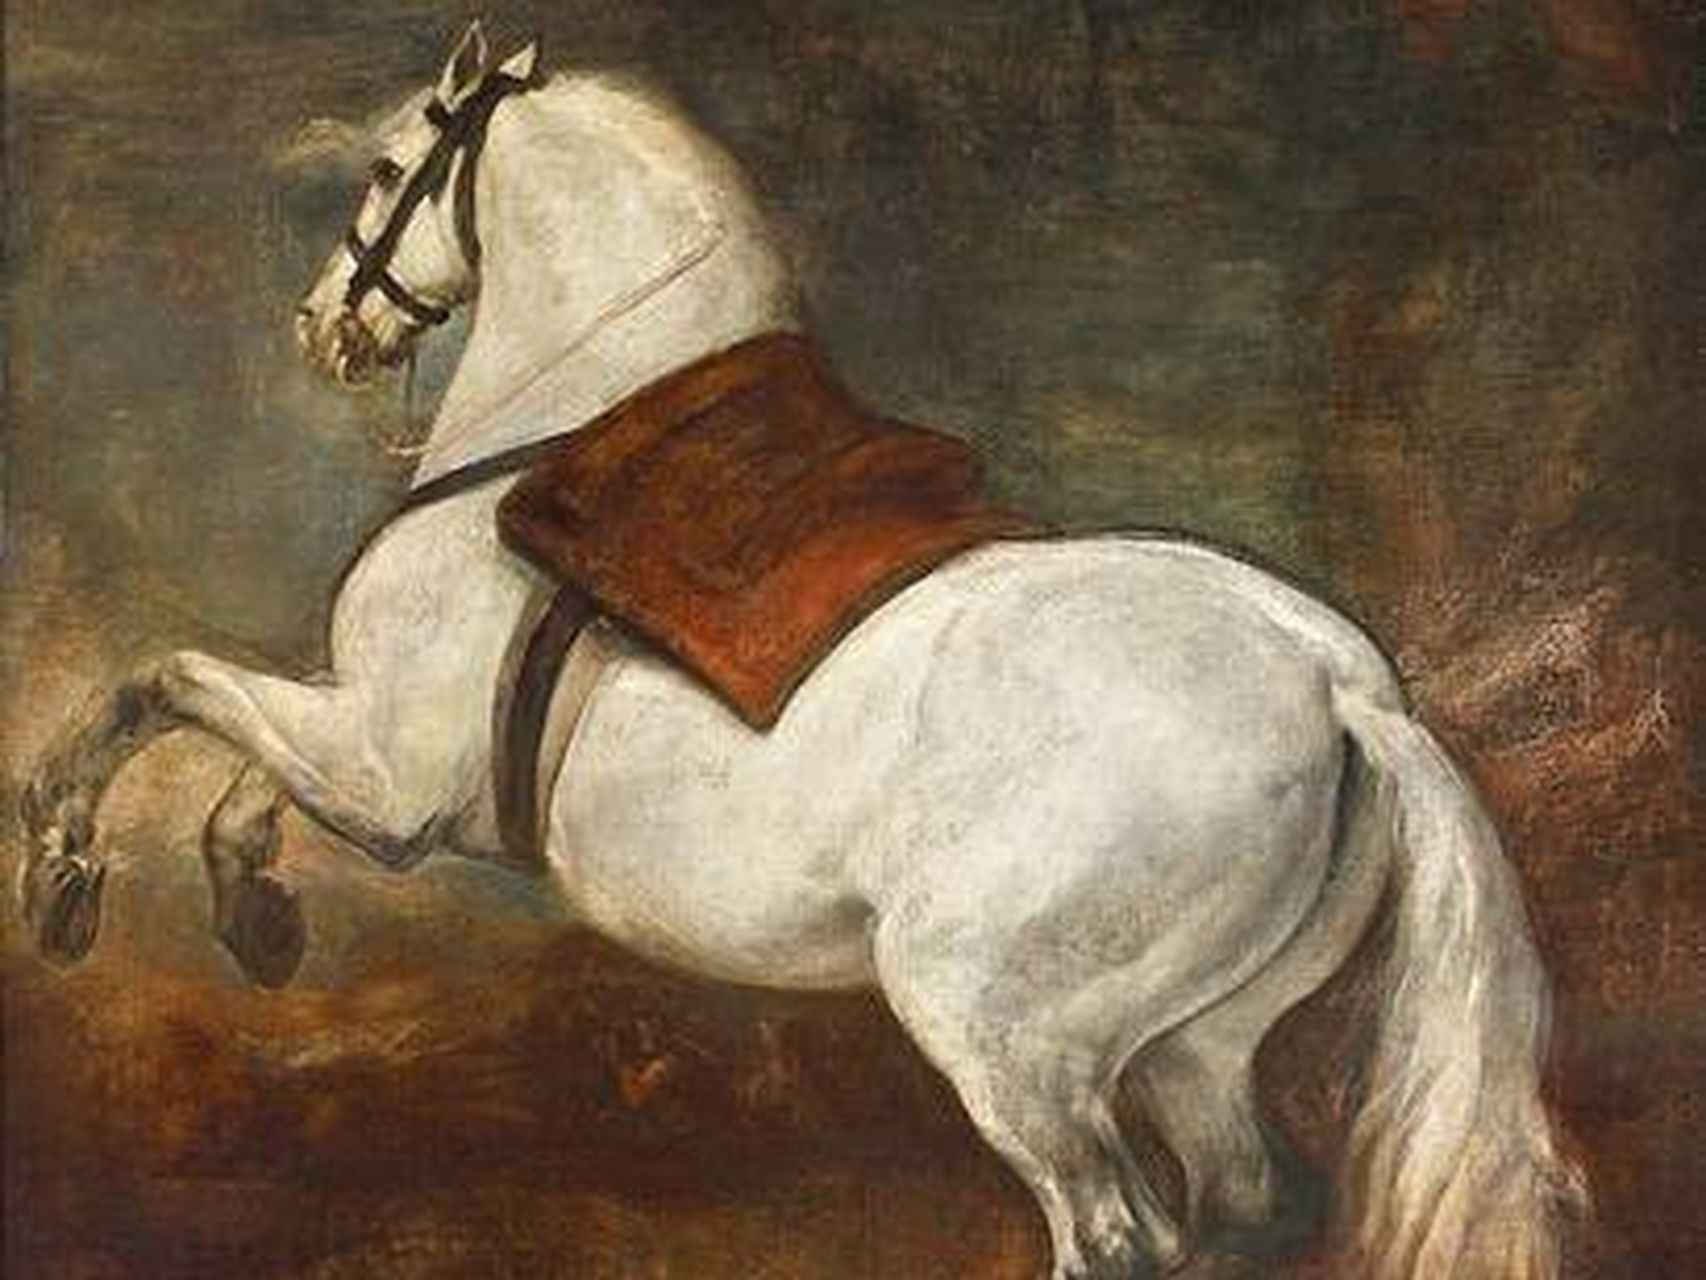 El museo mostrará este espectacular Caballo blanco de Velázquez.